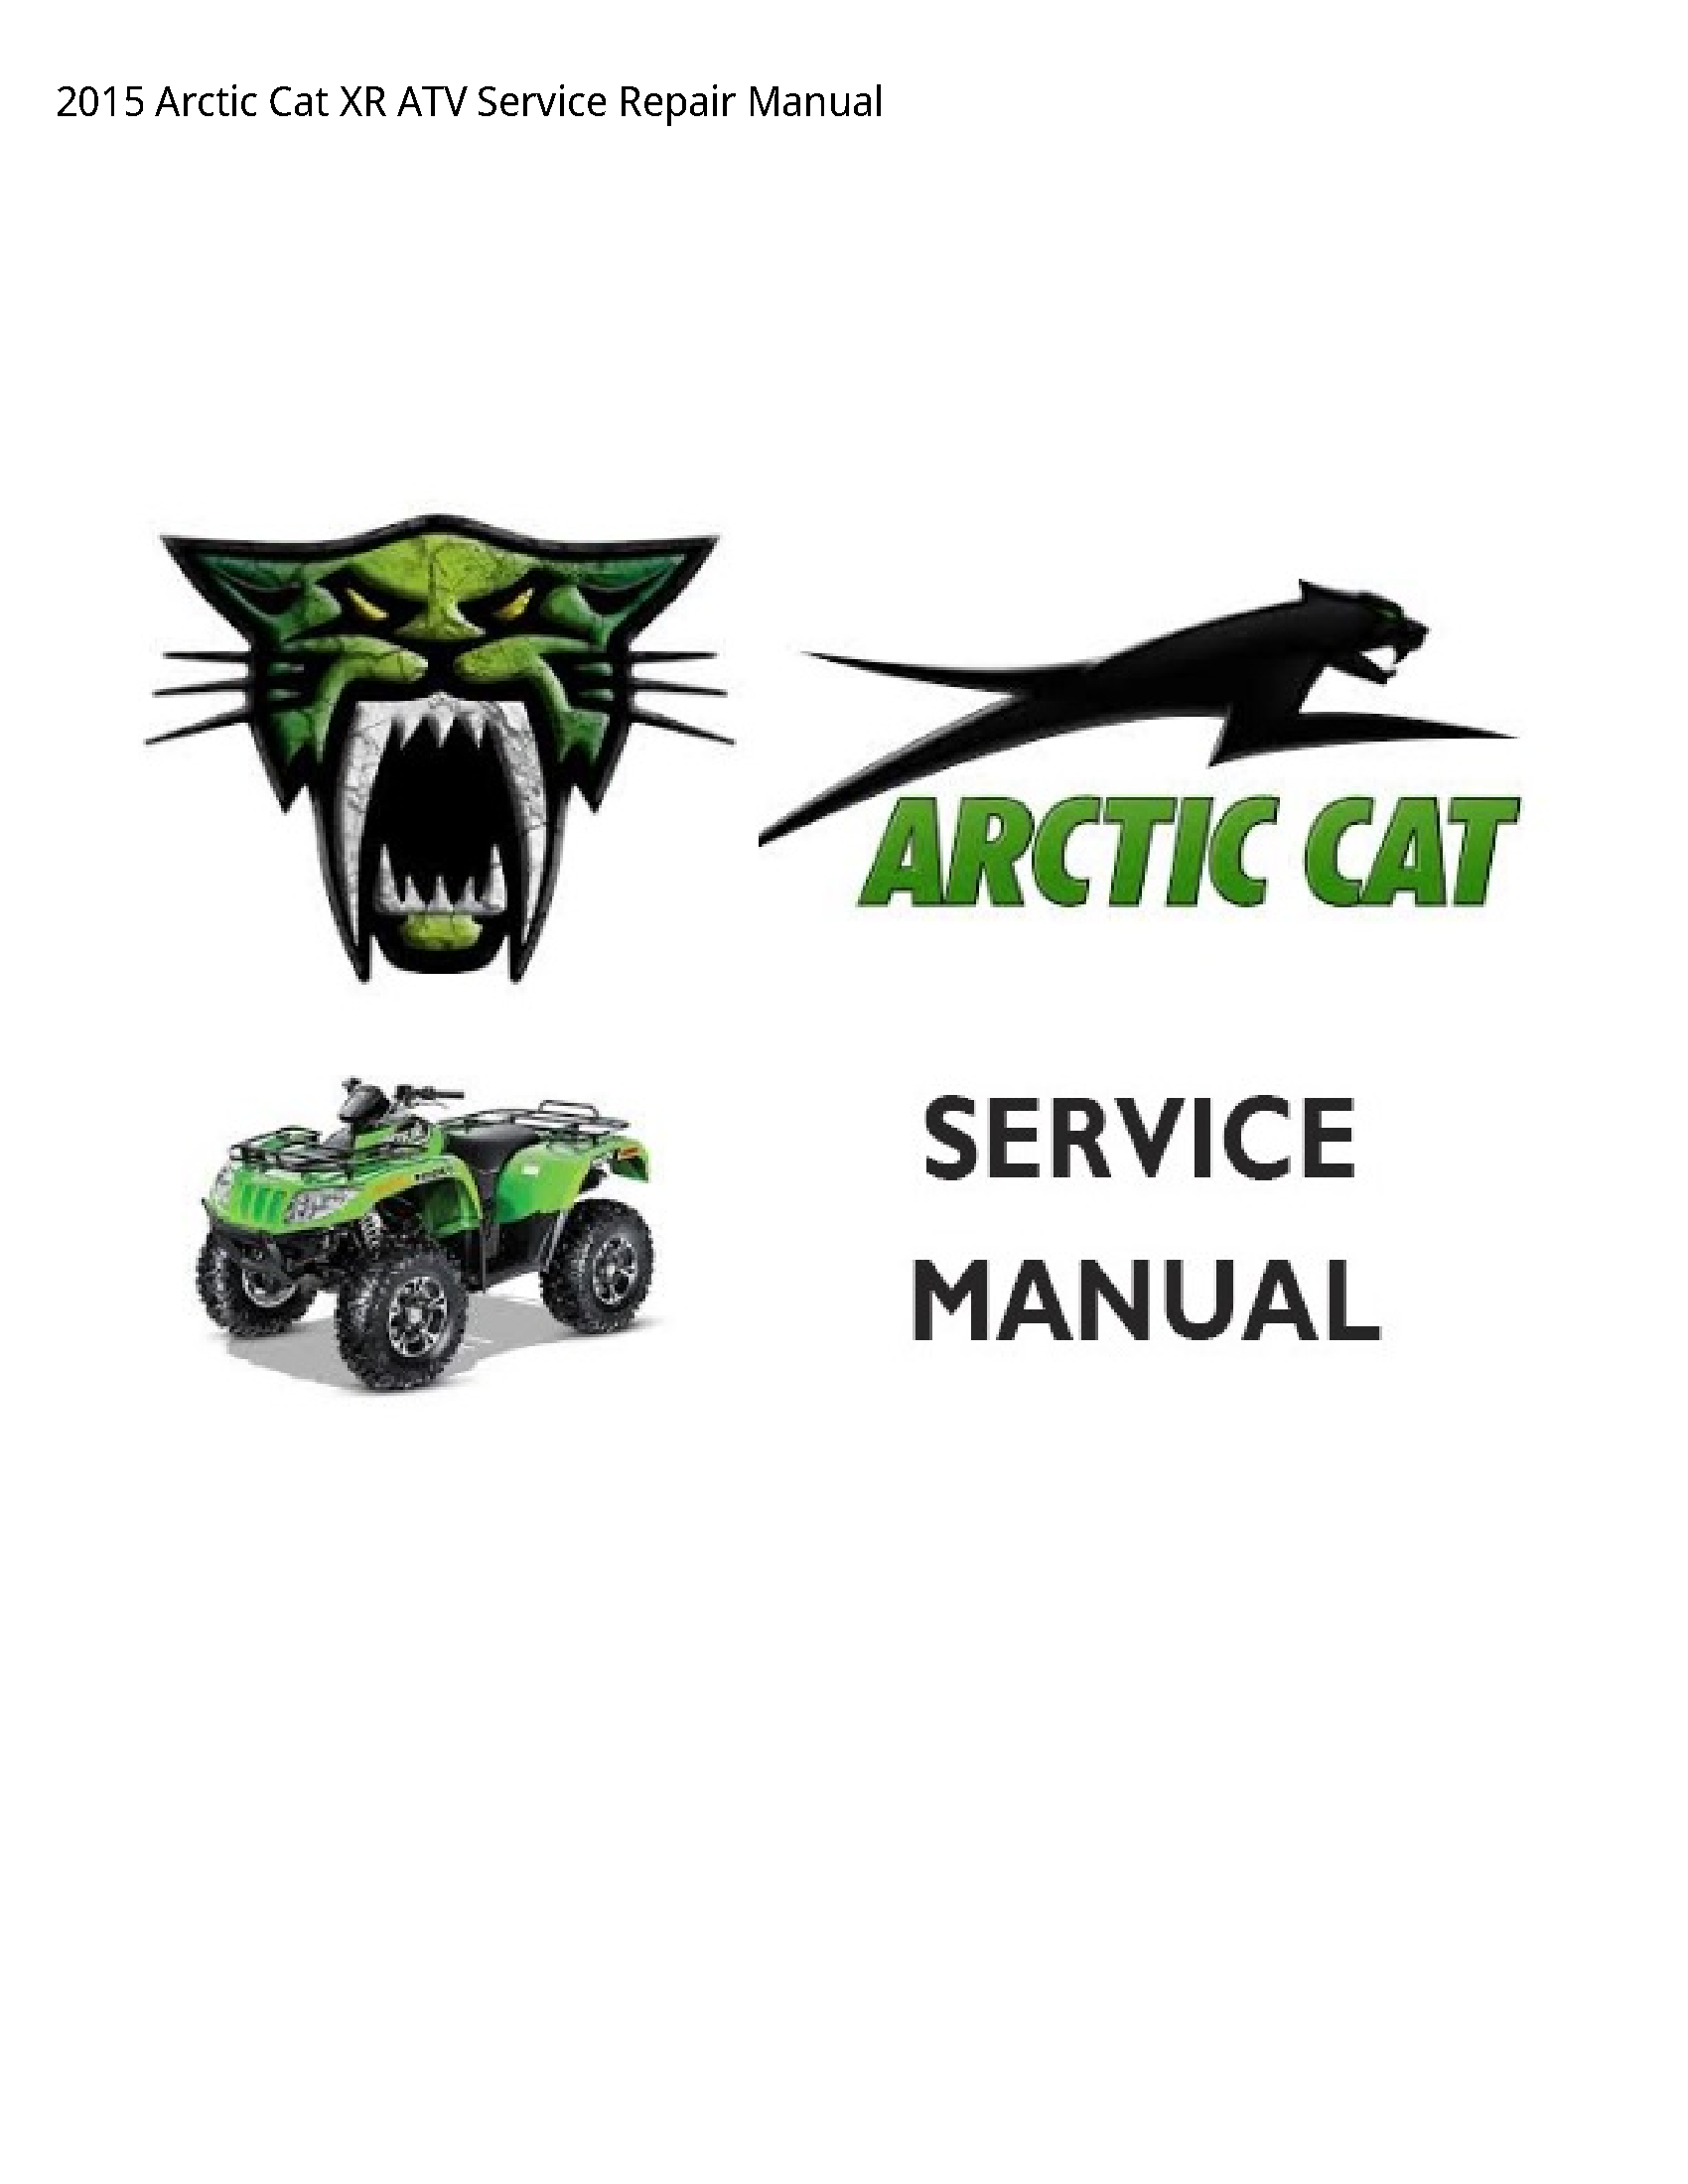 Arctic Cat XR ATV manual